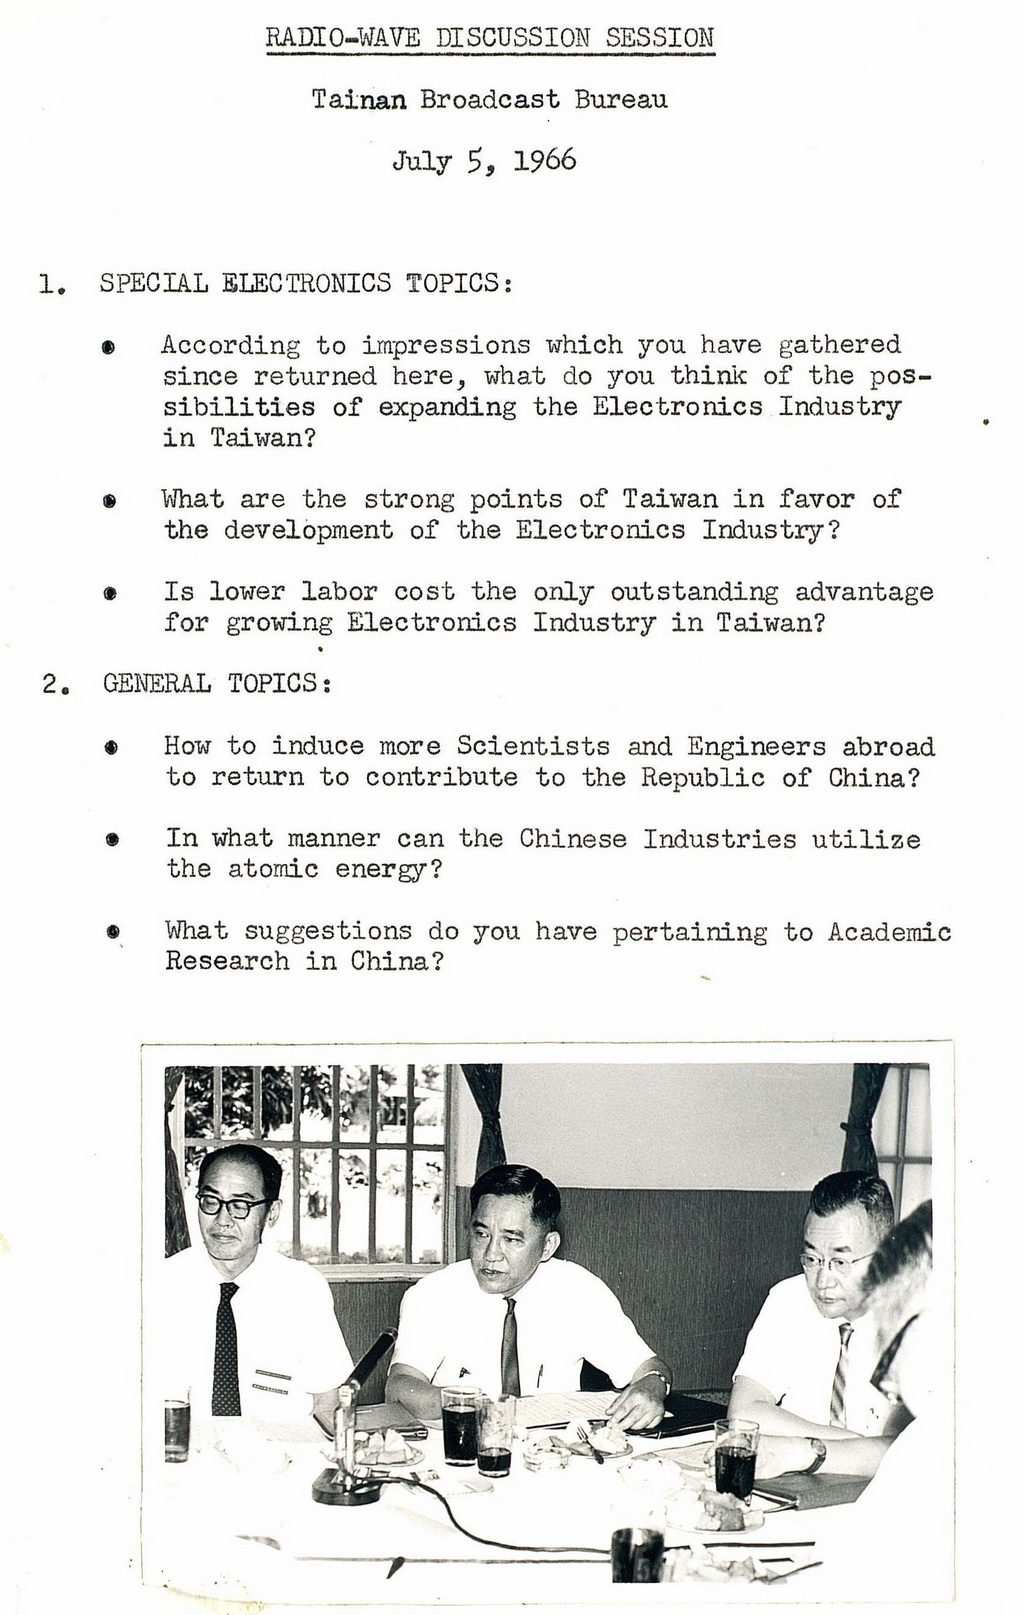 Radio-Wave Discussion Session, Tainan Broadcast Bureau, July 5, 1966